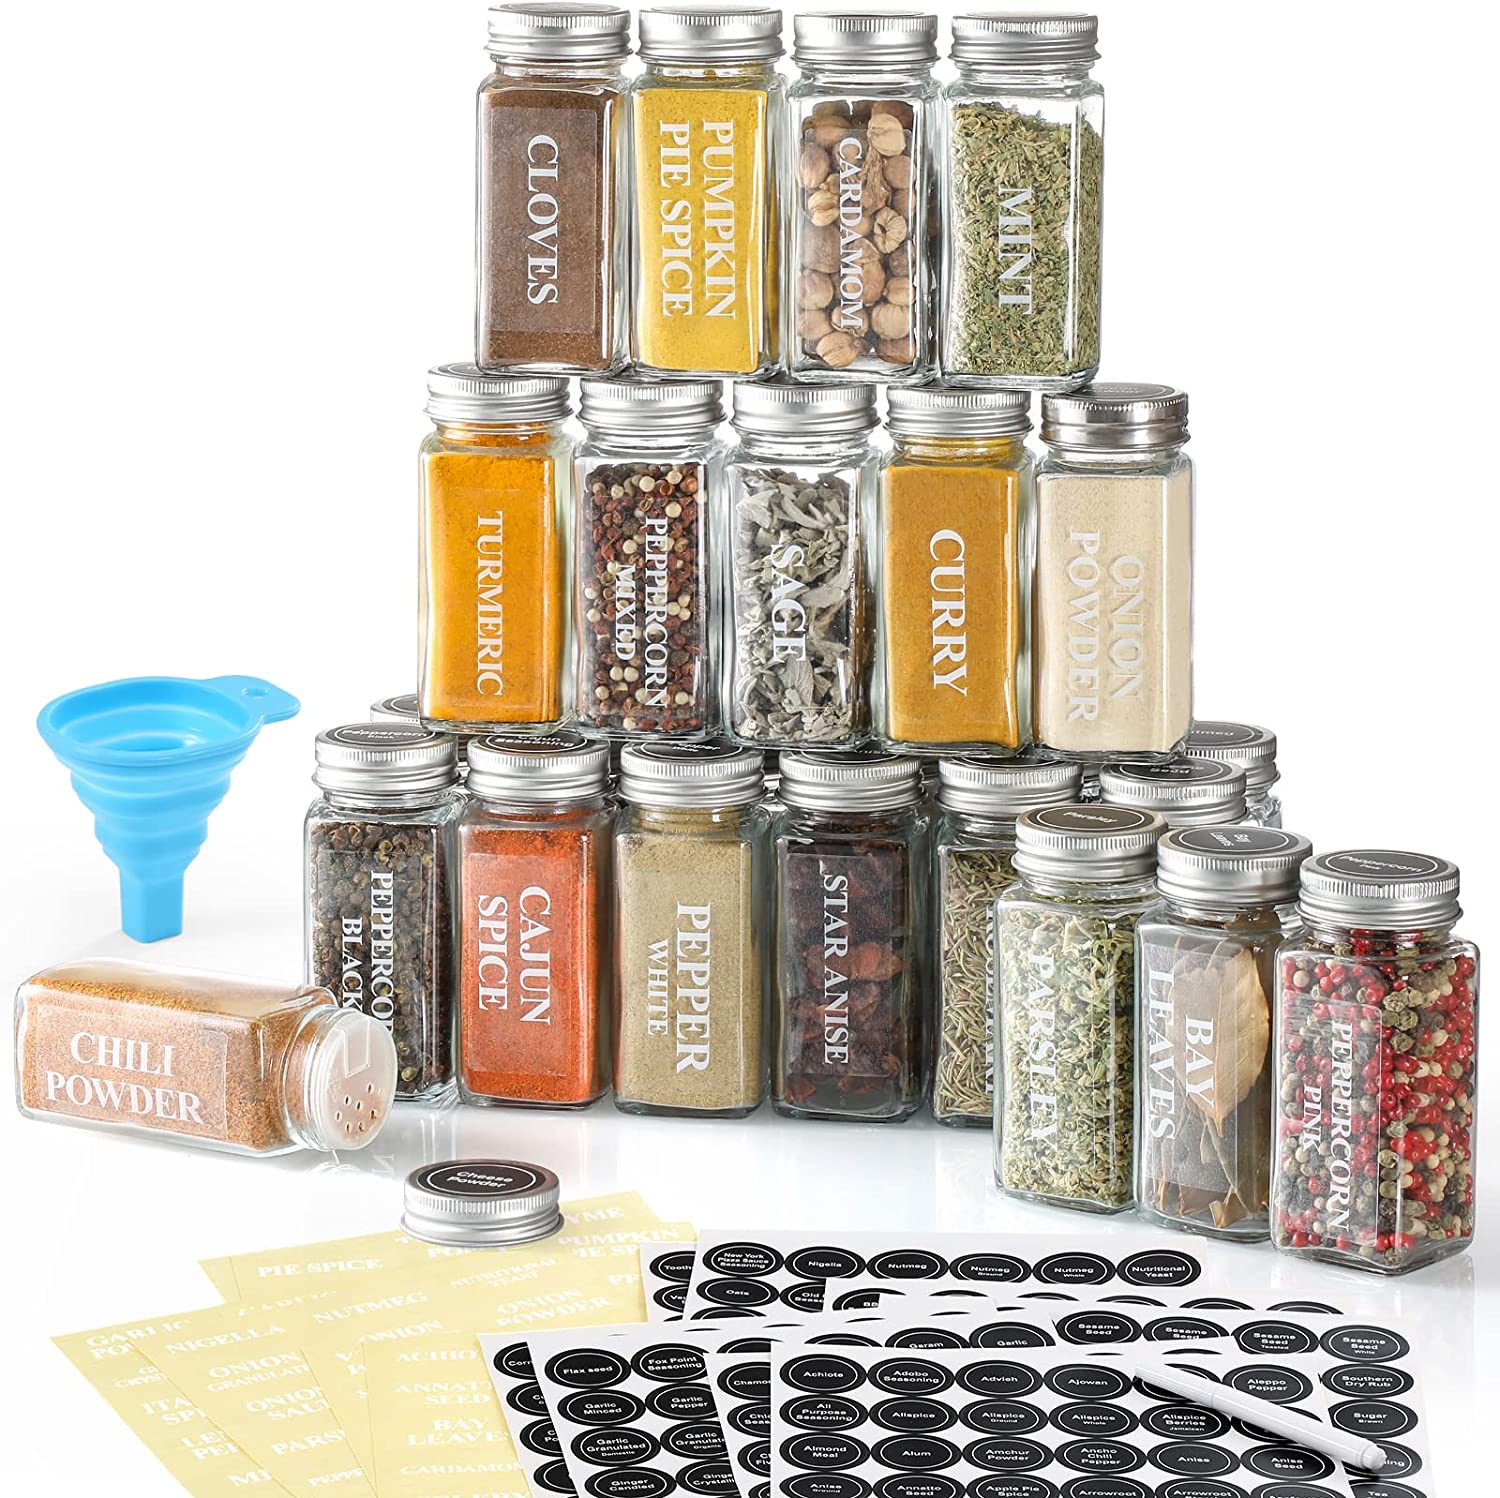 NETANY 24 Pcs Spice Jars with Labels - 4 oz Glass Spice Jars with